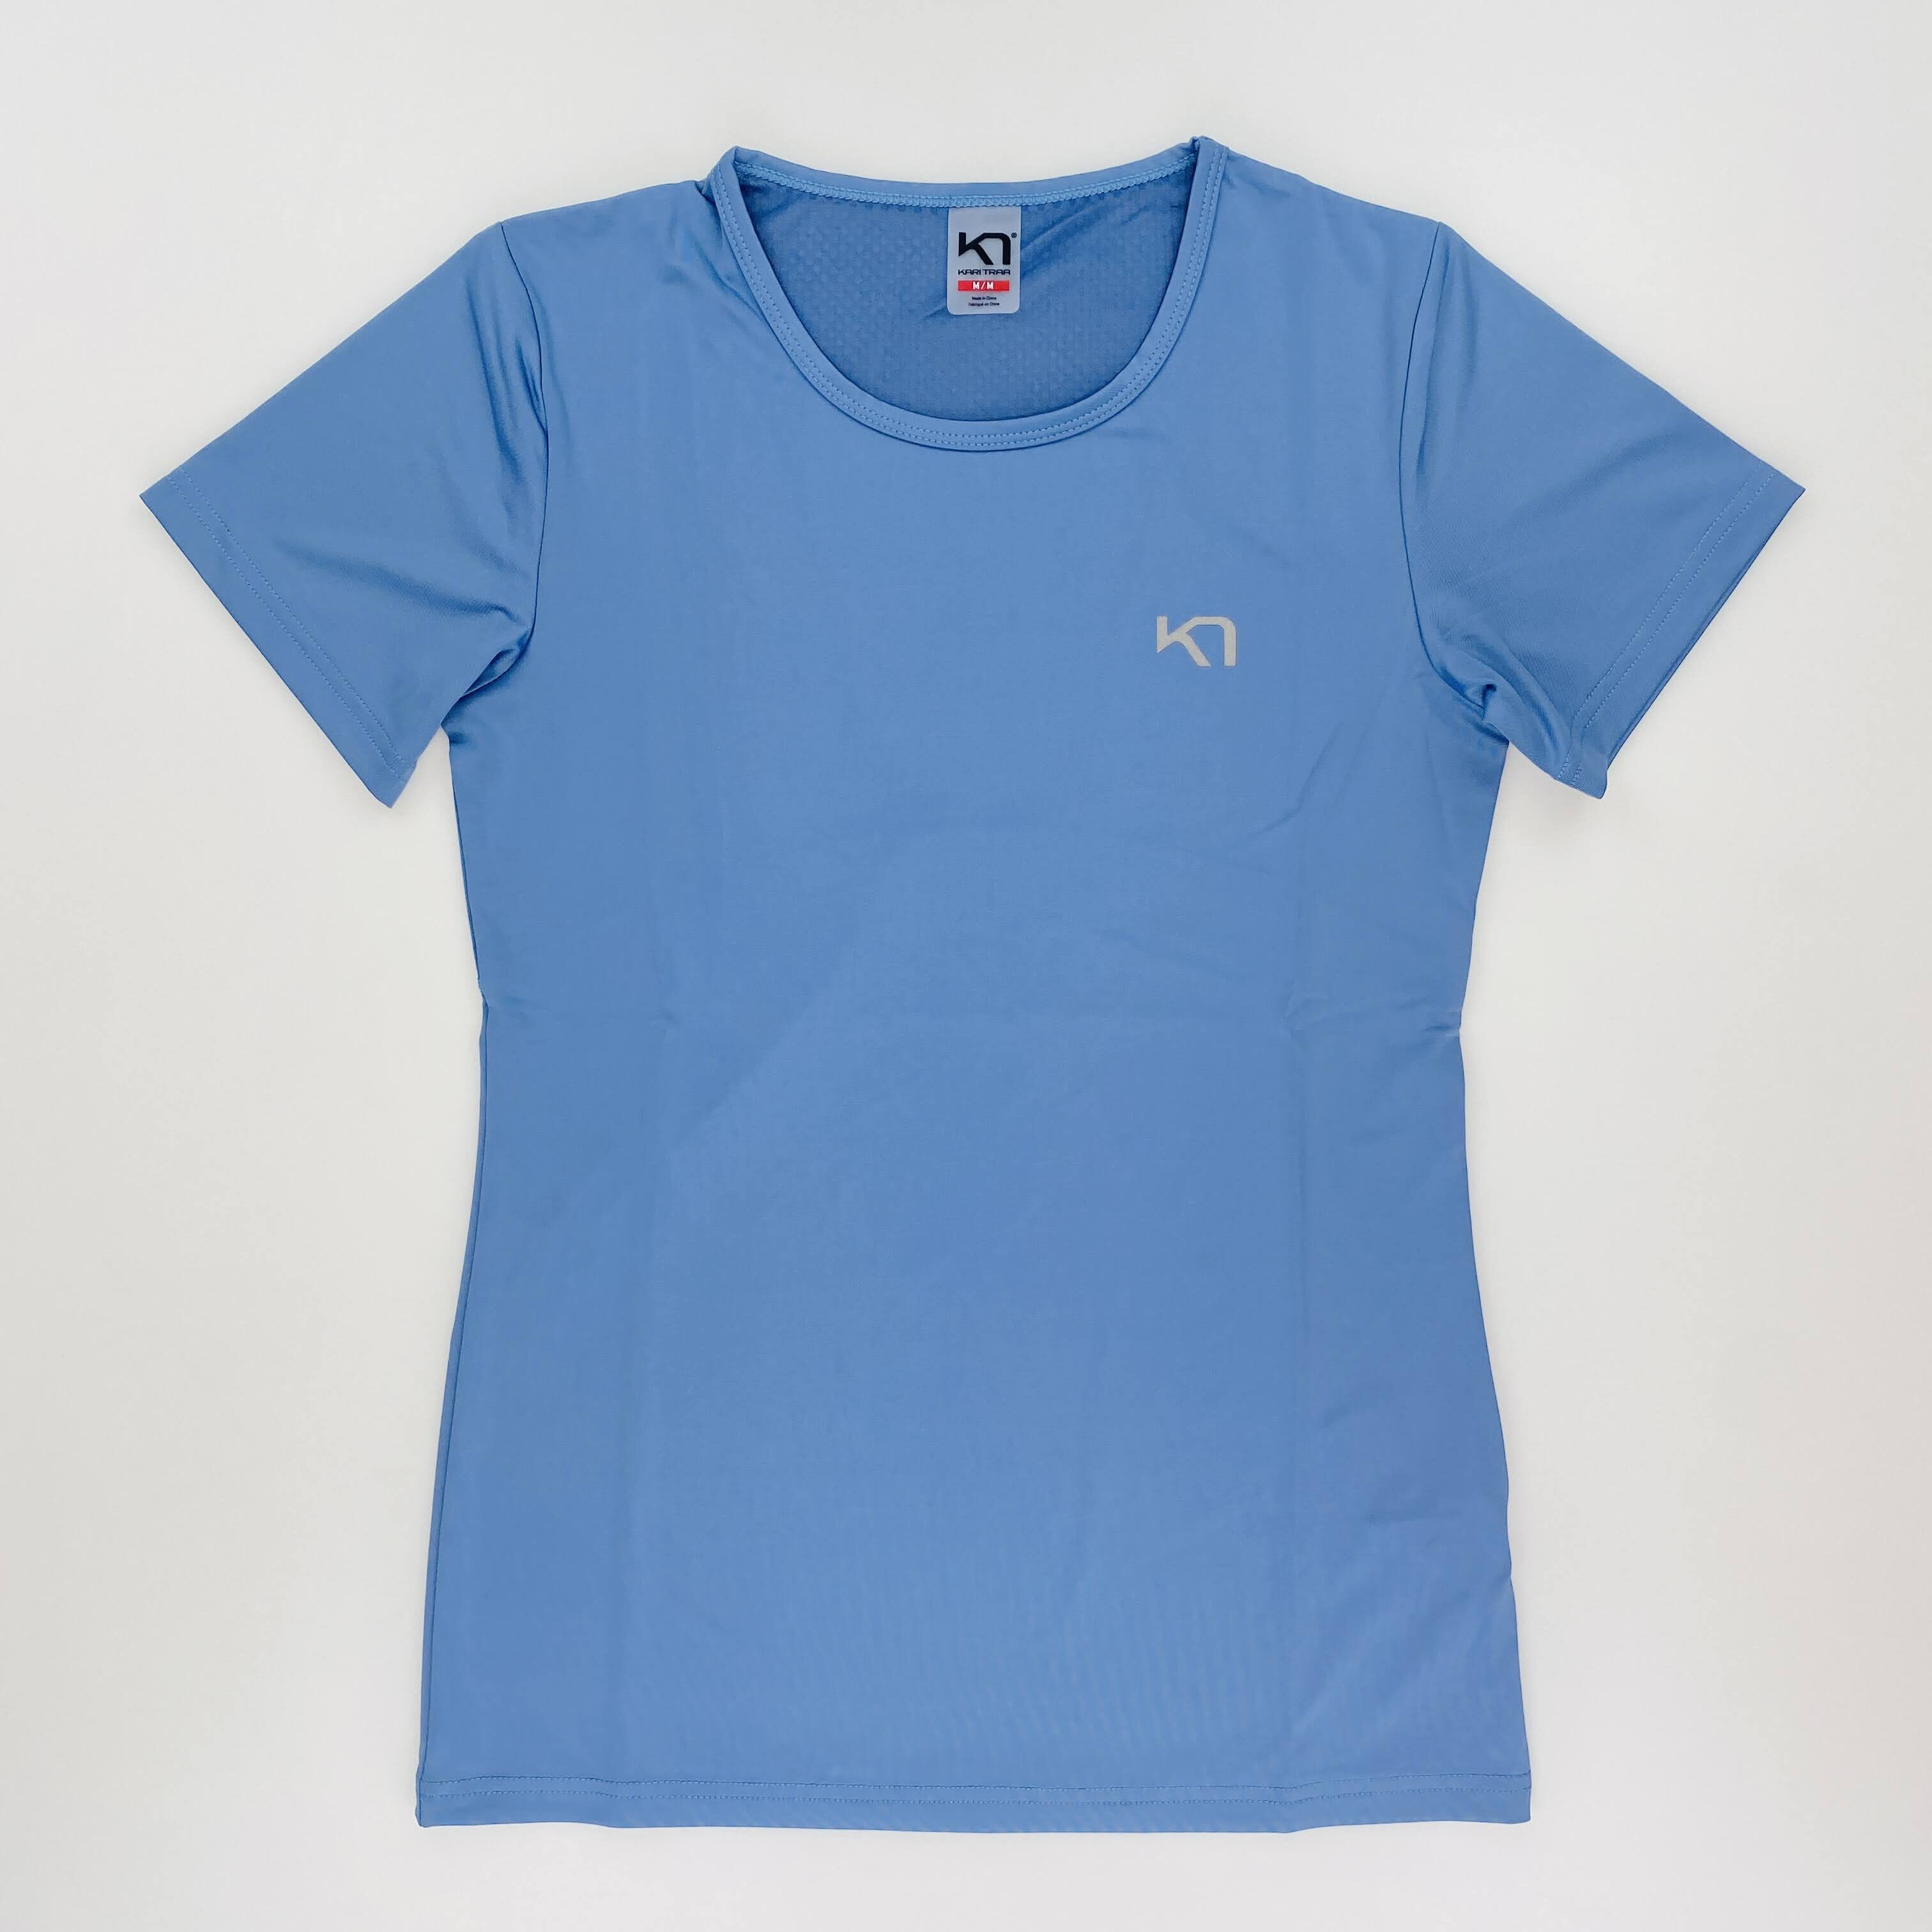 Kari Traa Mari Tee - T-shirt di seconda mano - Donna - Blu - M | Hardloop